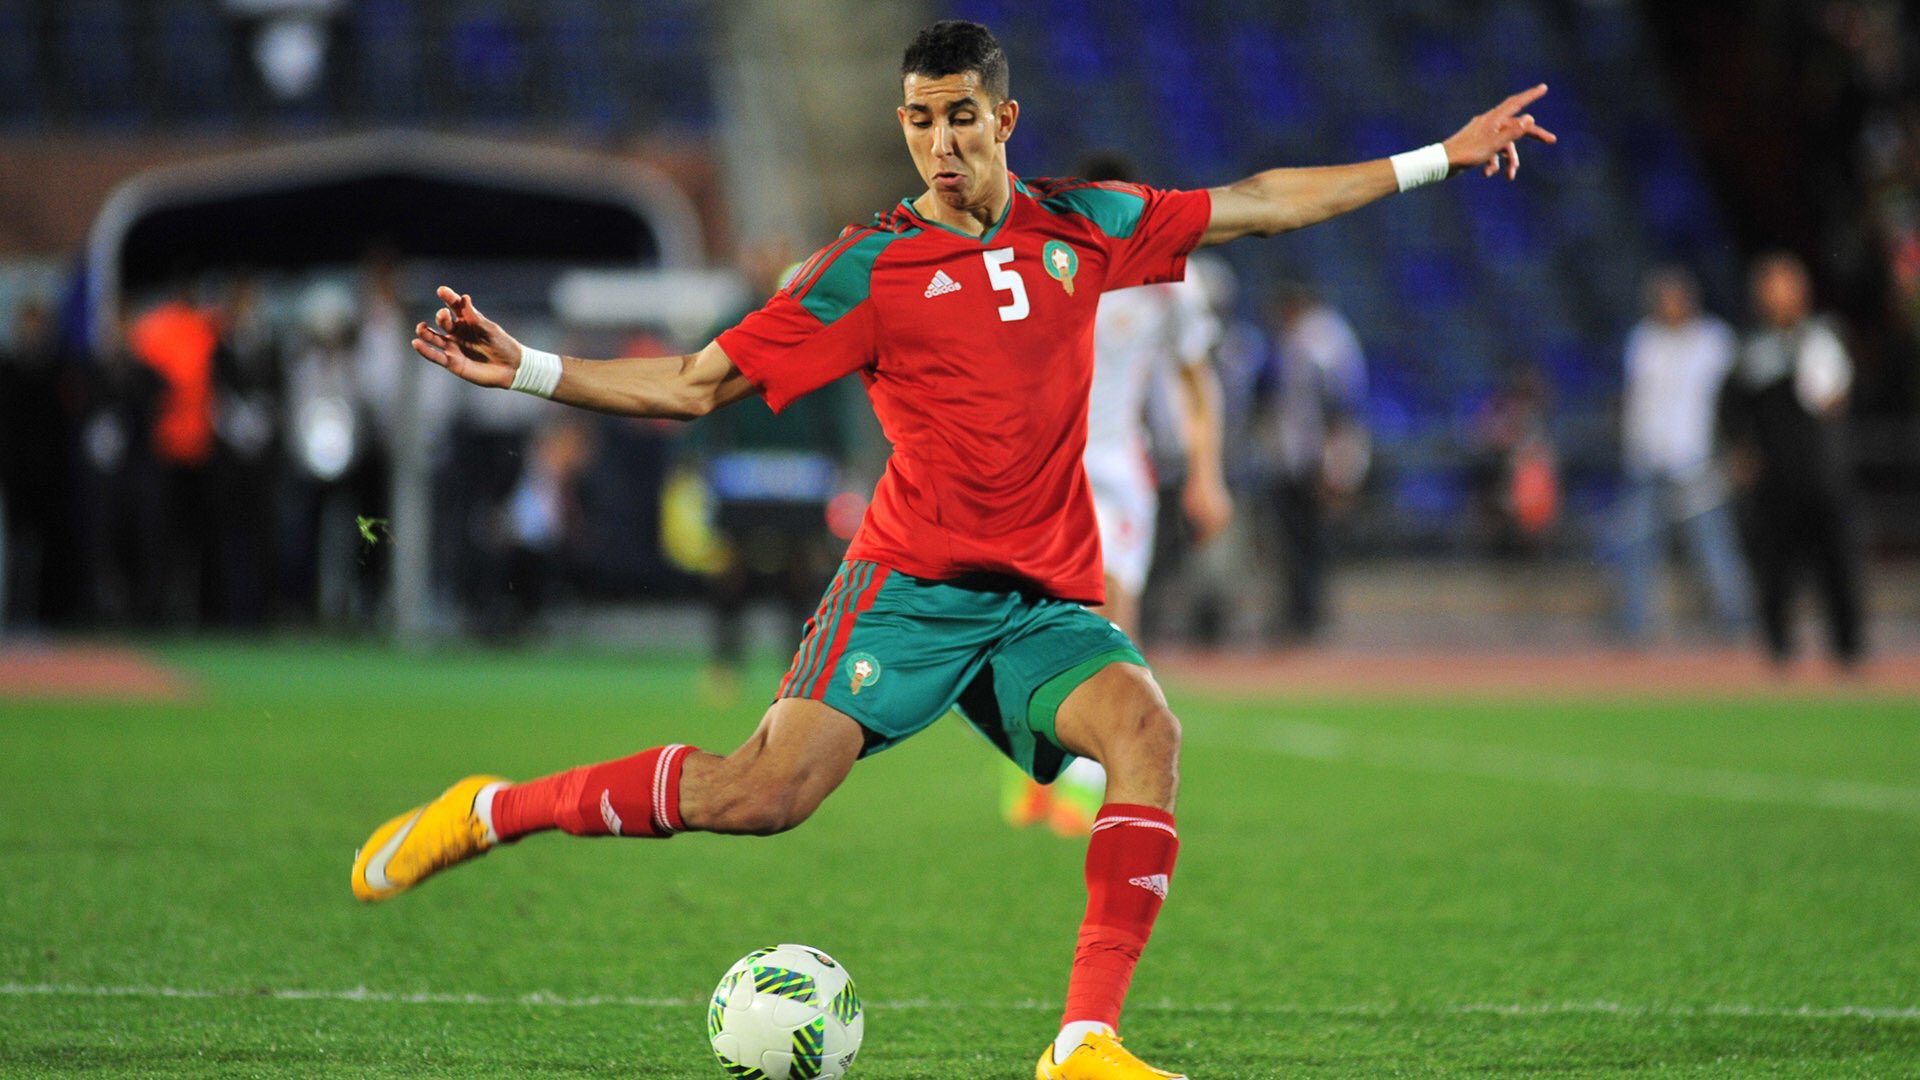 2022 World Cup: “We don't fear any team” – Morocco's El Yamiq | SportsWorldGhana.com